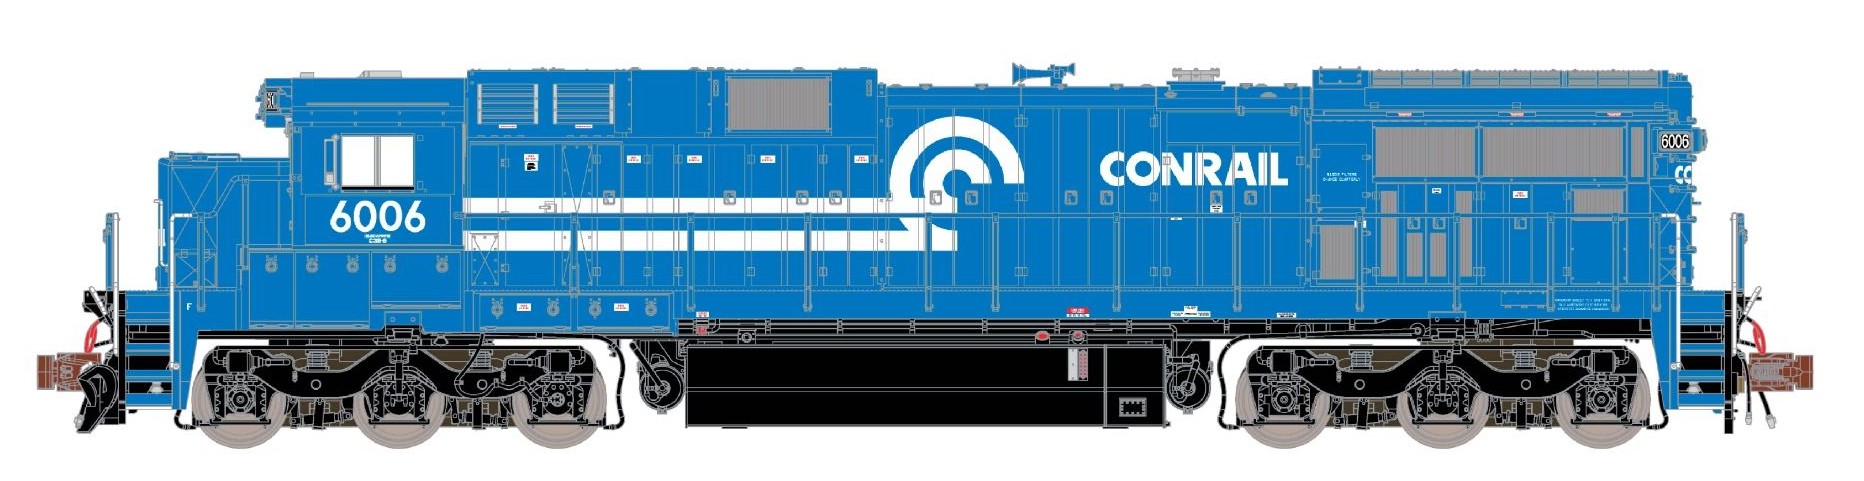 ScaleTrains Rivet Counter N SXT39175 DCC/ESU Loksound 5 Equipped GE C39-8 Locomotive Phase III Conrail '1990s Era' CR #6006